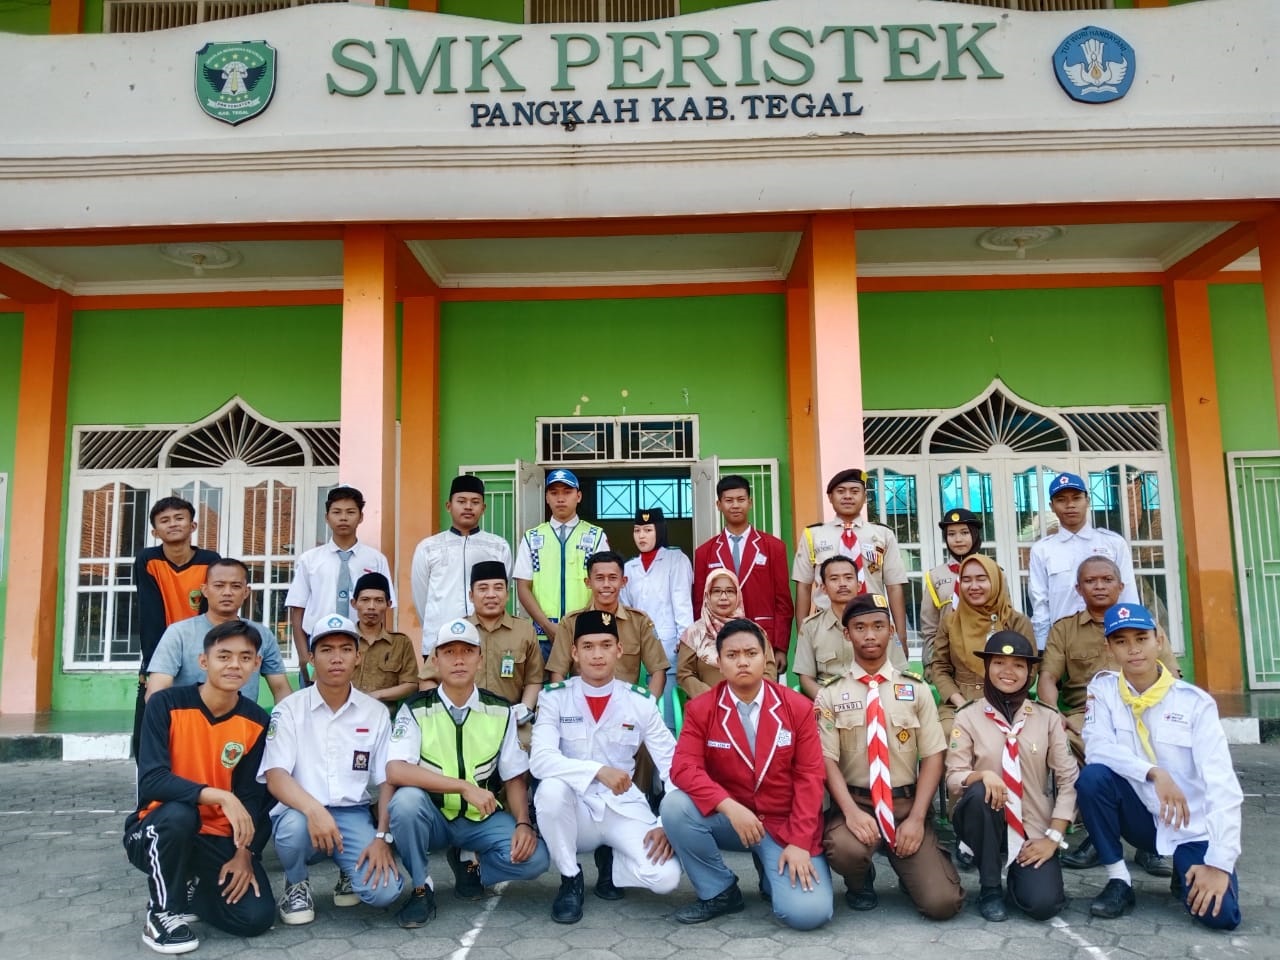 SMK Peristek Pangkah Kabupaten Tegal Sertijab Pengurus OSIS 